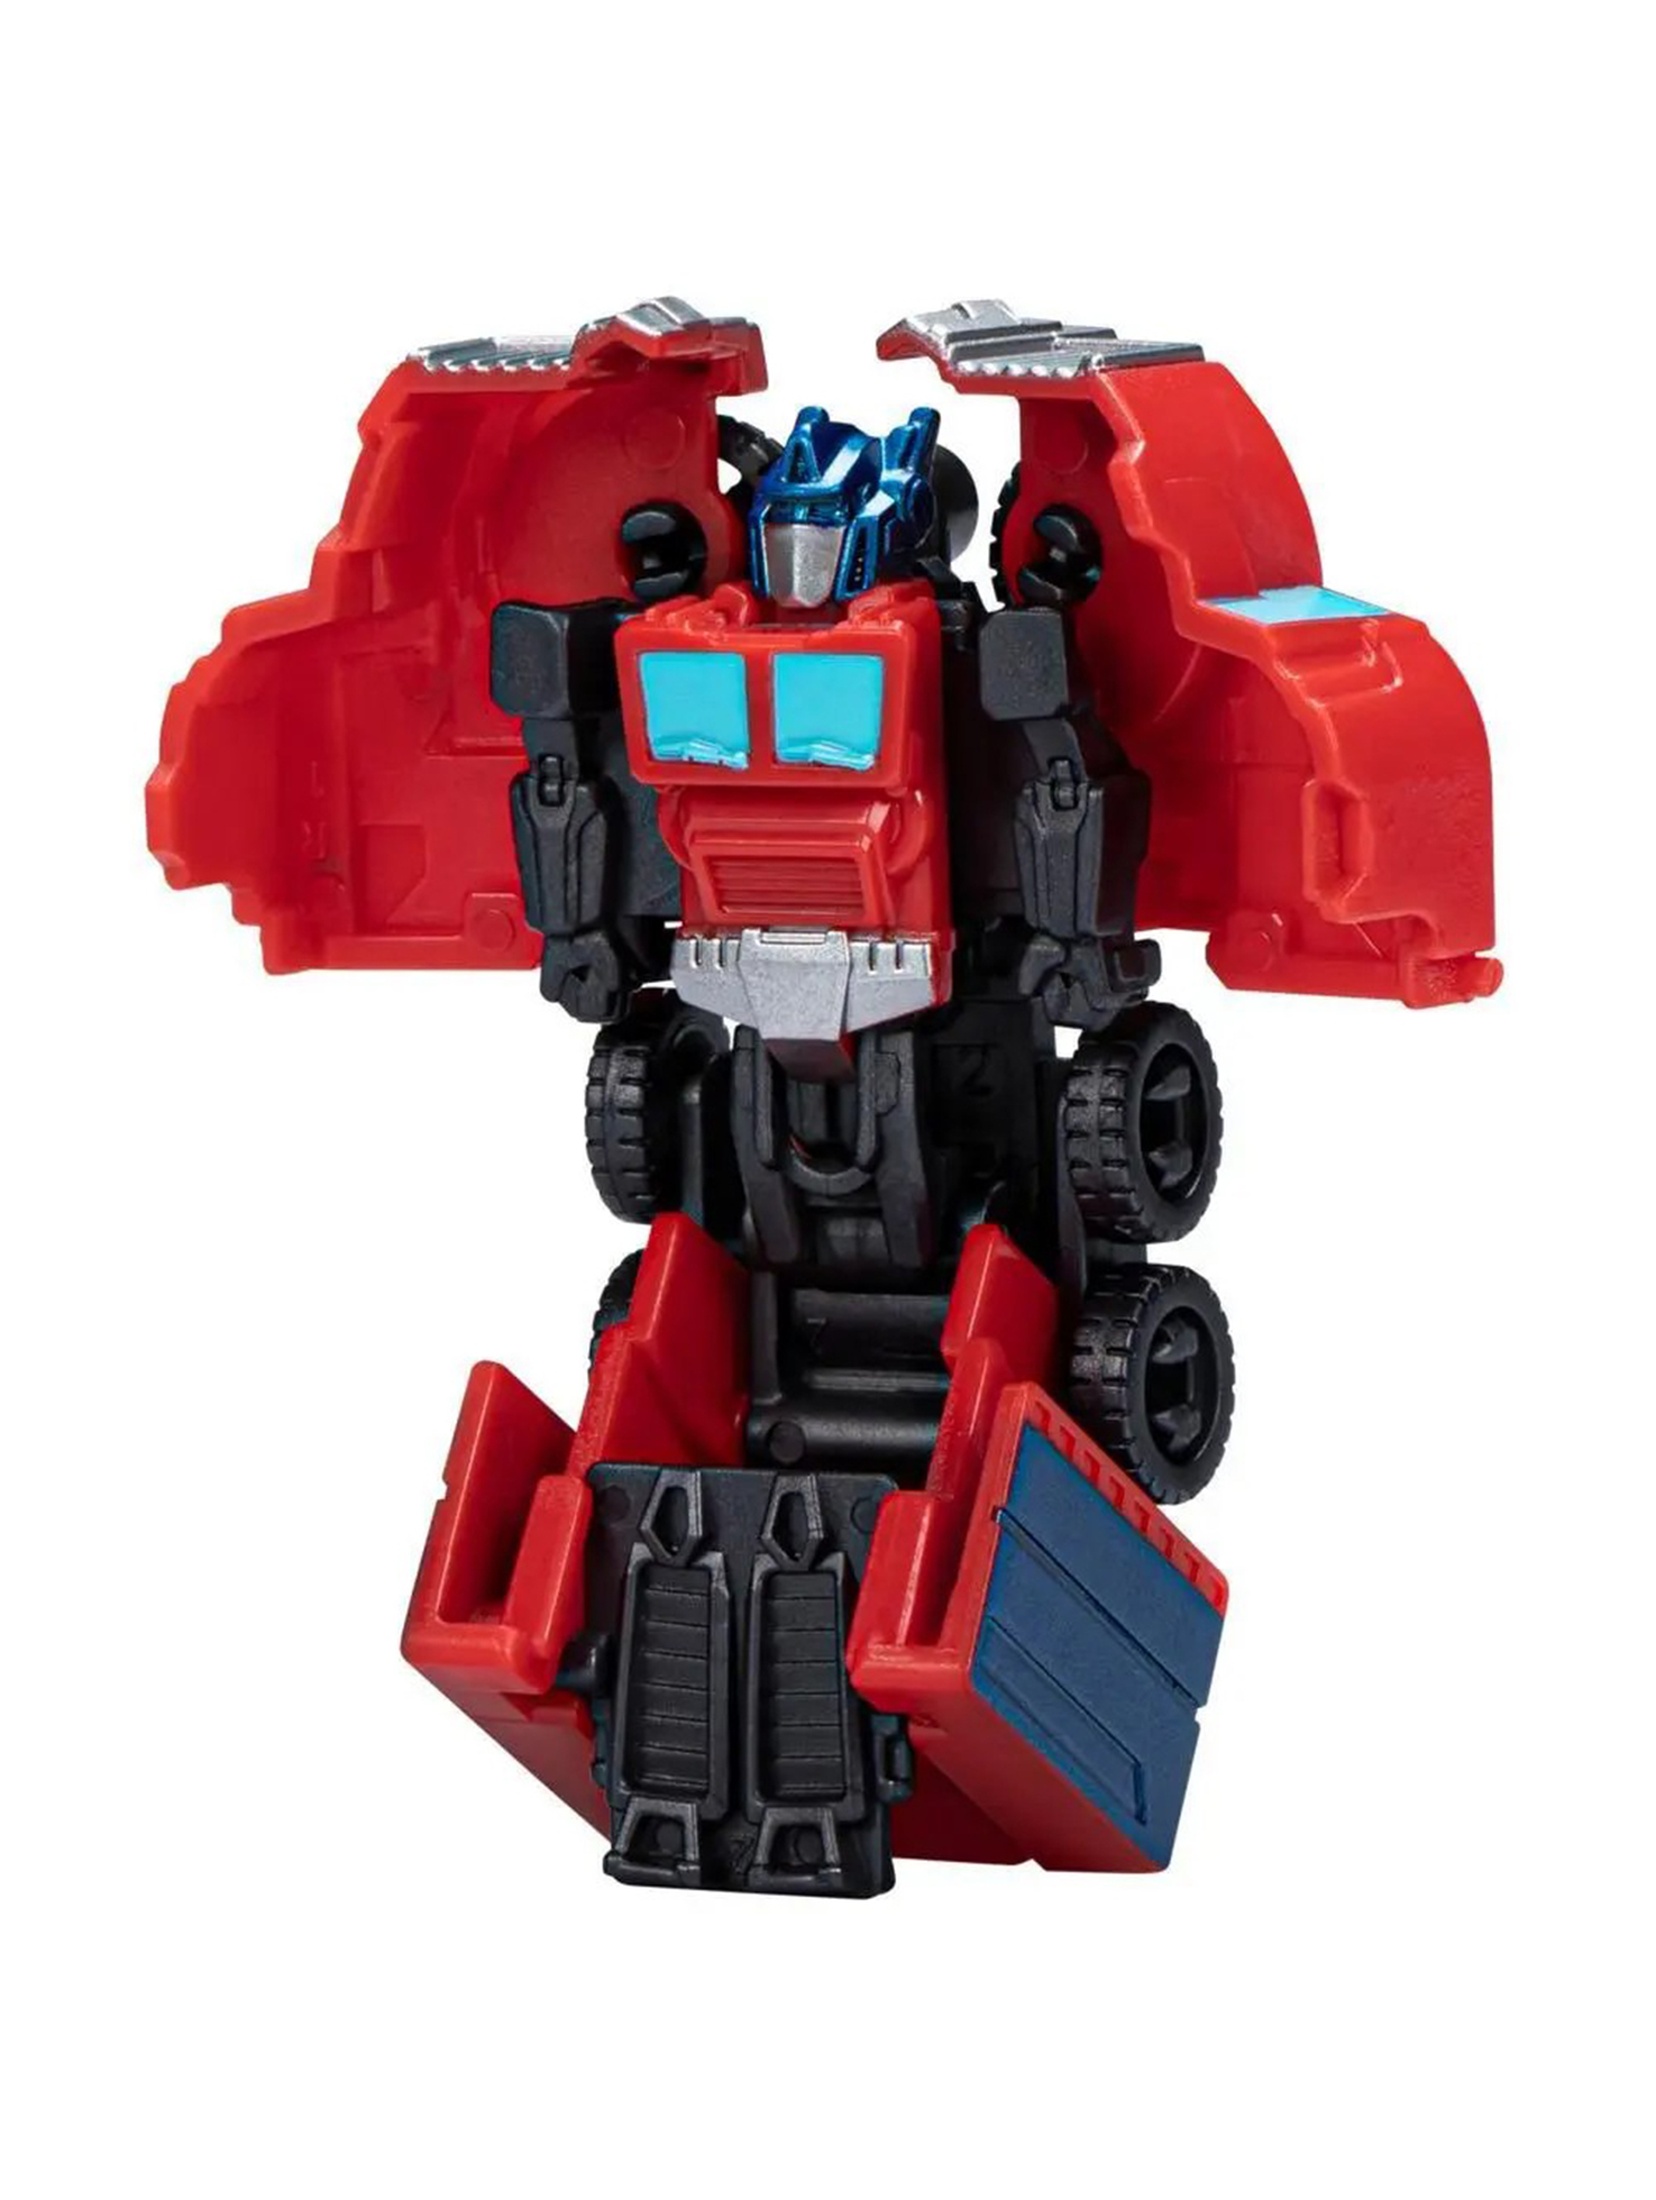 Hasbro Figurka Transformers Earthspark Optimus Prime